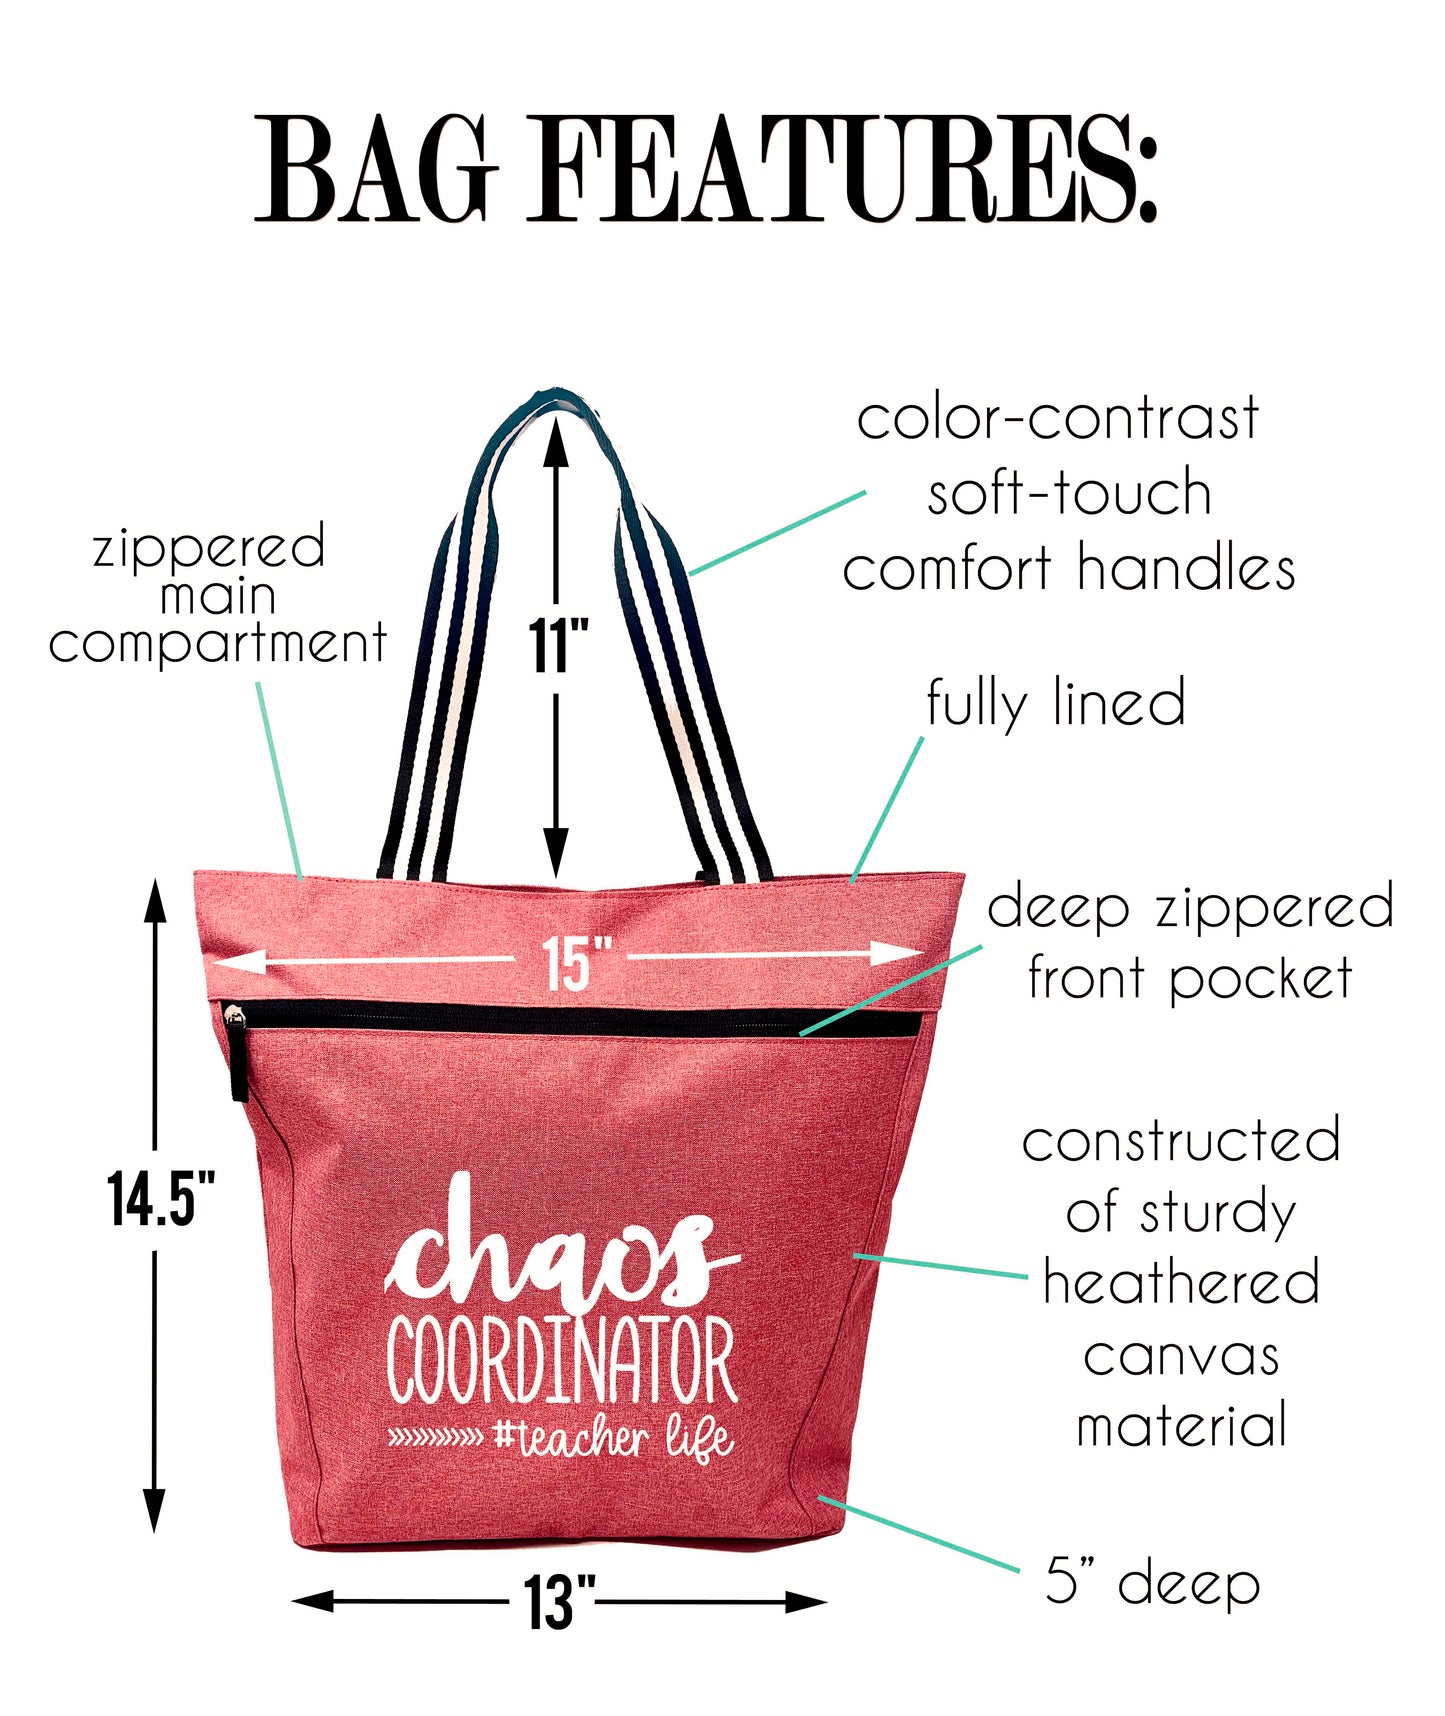 Chaos Coordinator #Teacher Life Lexie Coral Tote Bag for Teachers - Outlet Deal Utah